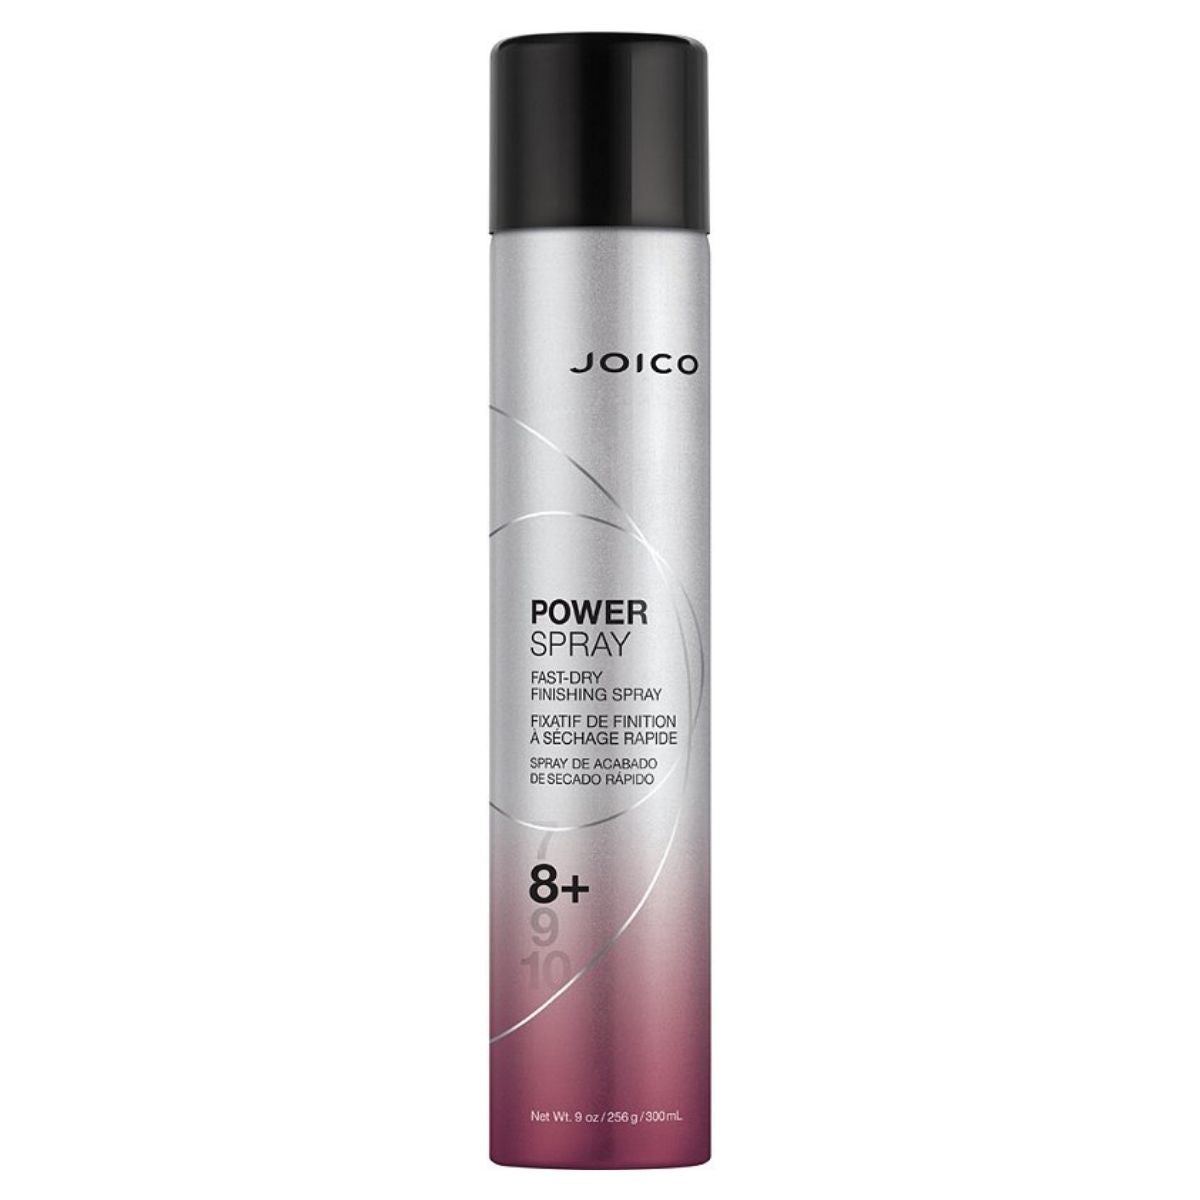 Joico Power Spray 8+ Fast Dry Finishing Spray